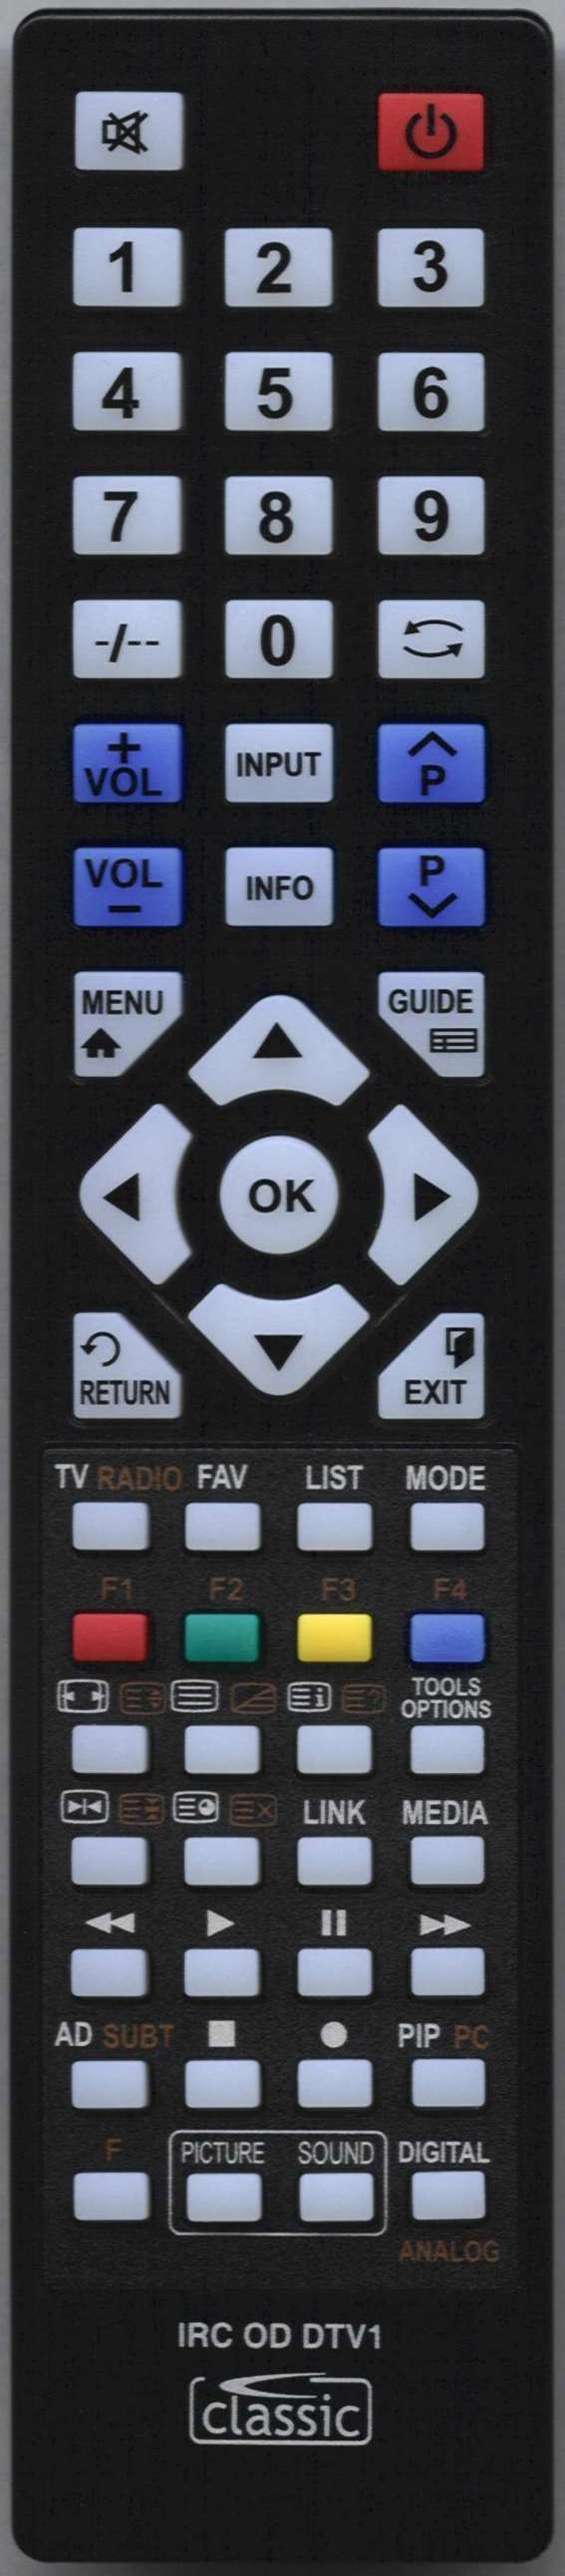 SONY KDLS32A12U Remote Control